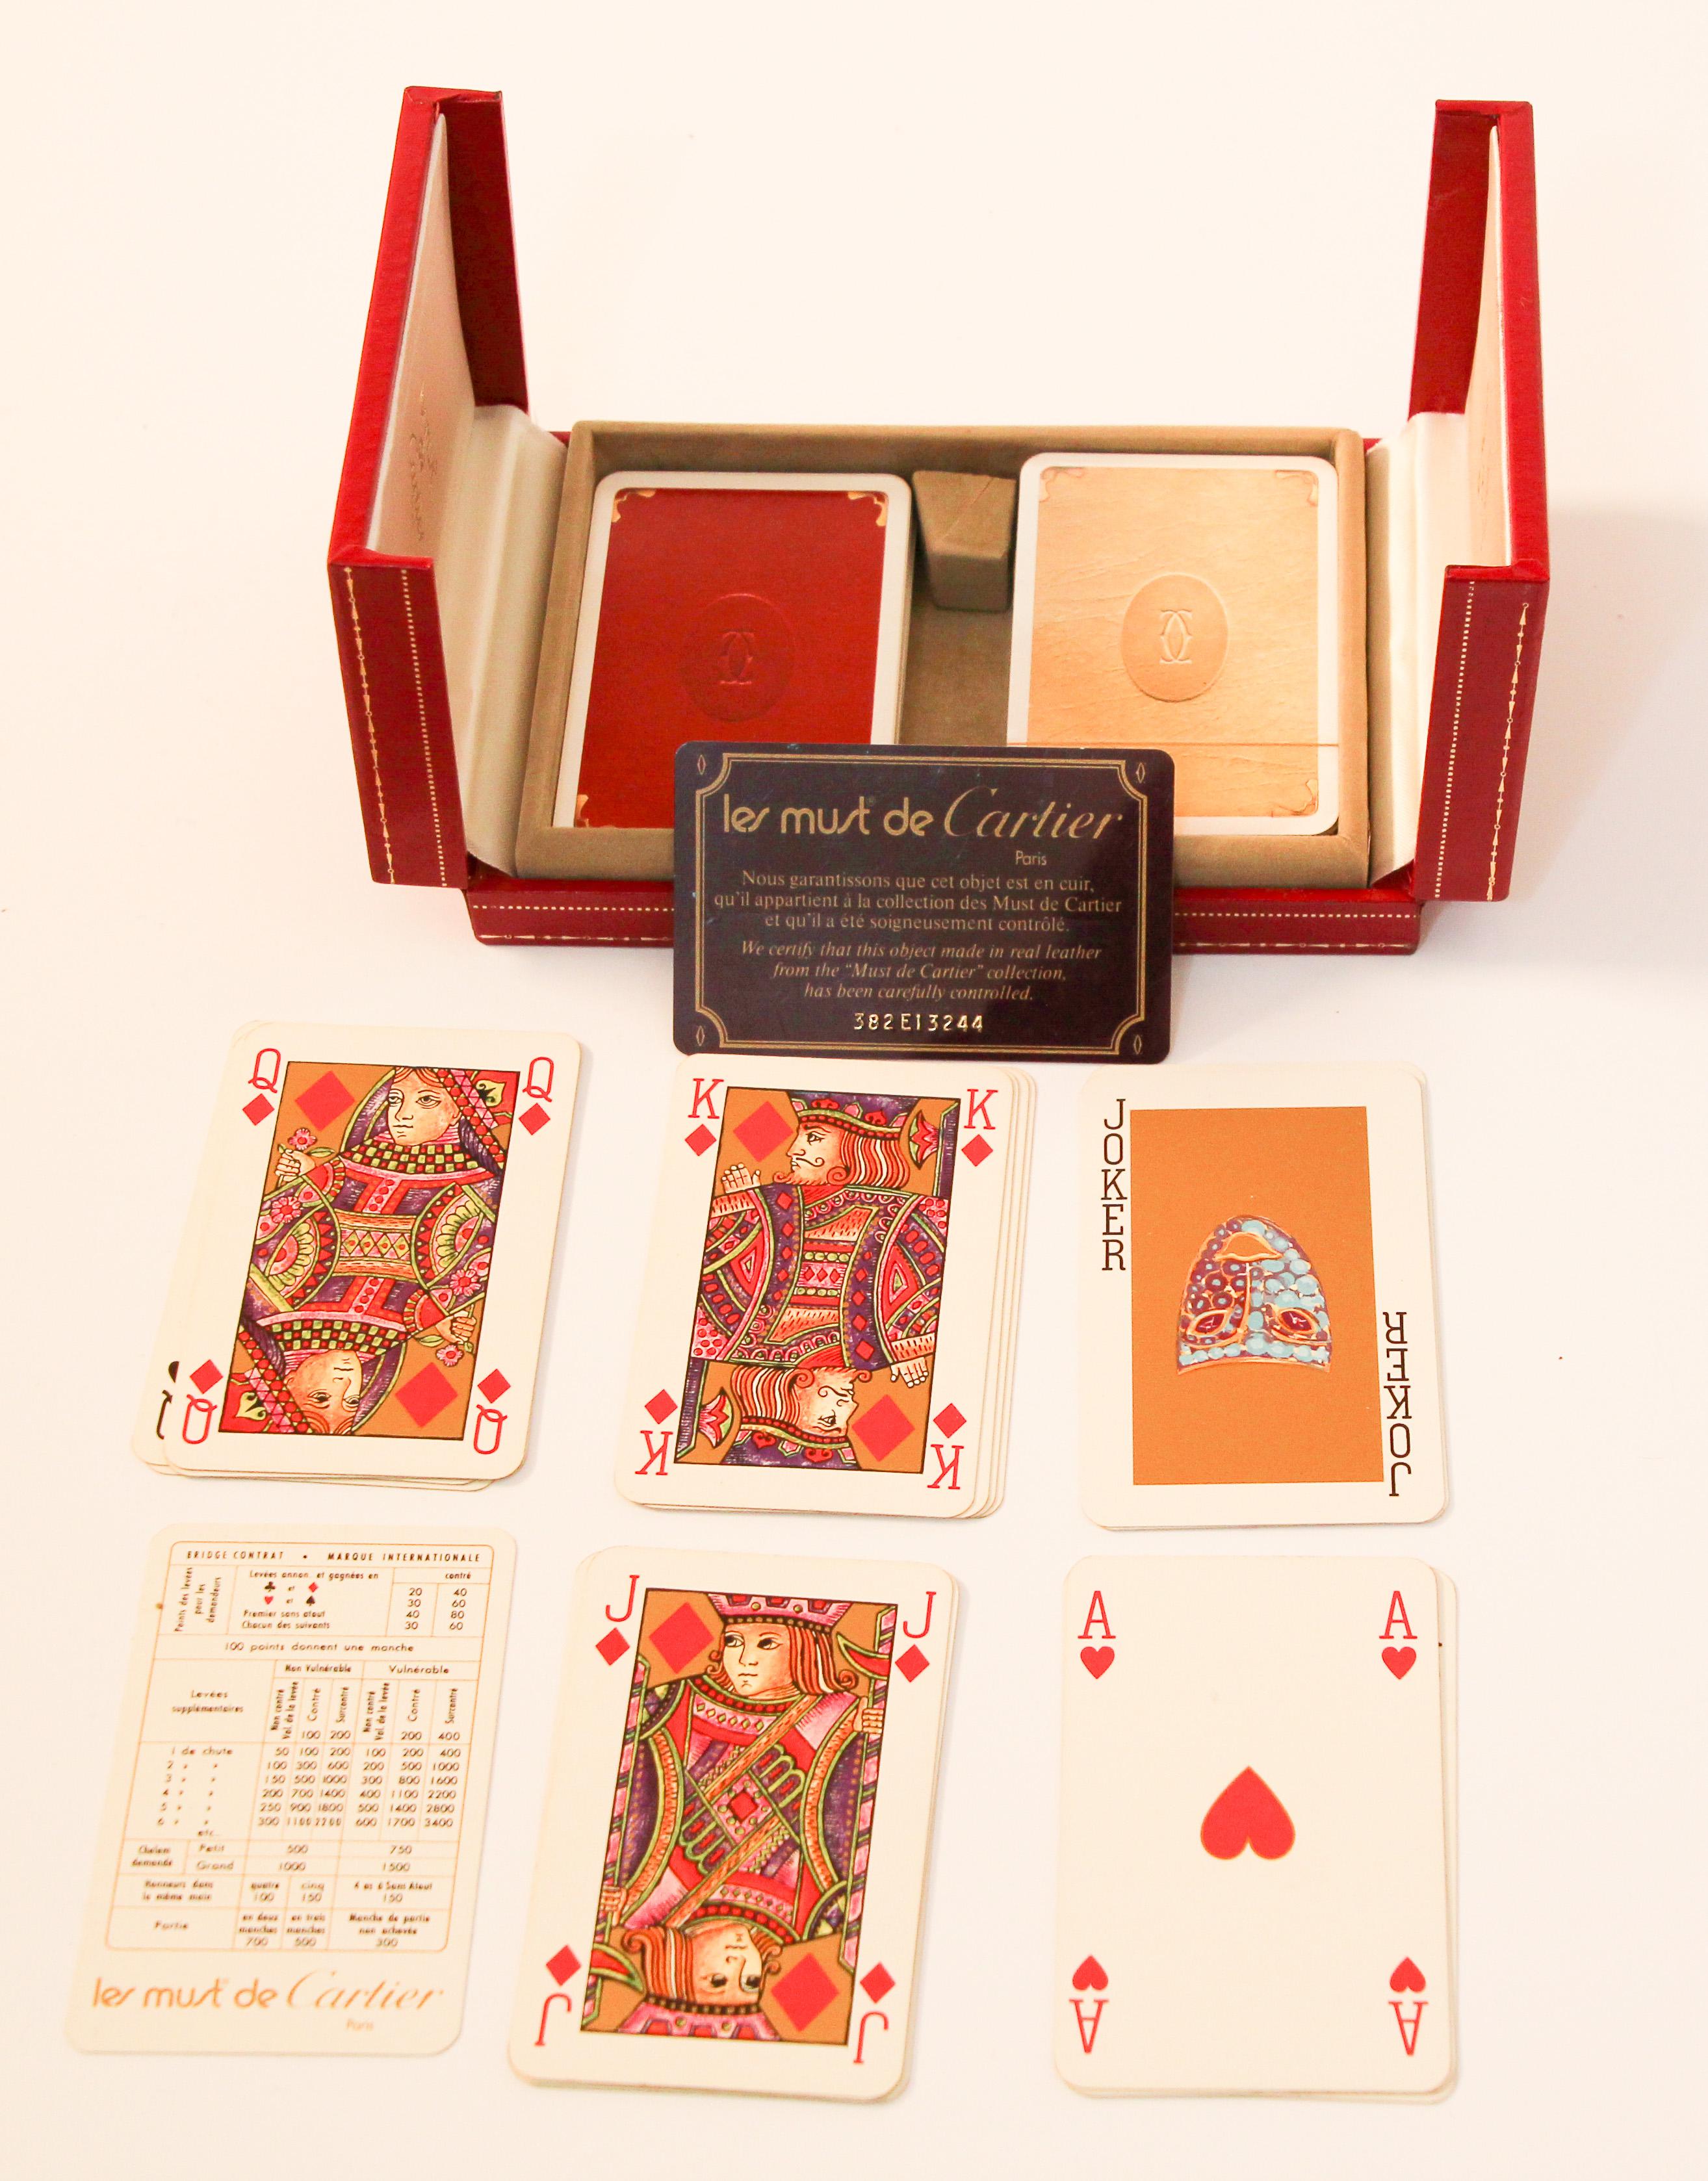 Paper Must de Cartier Paris Vintage Playing Poker or Bridge Cards in Red Original Box